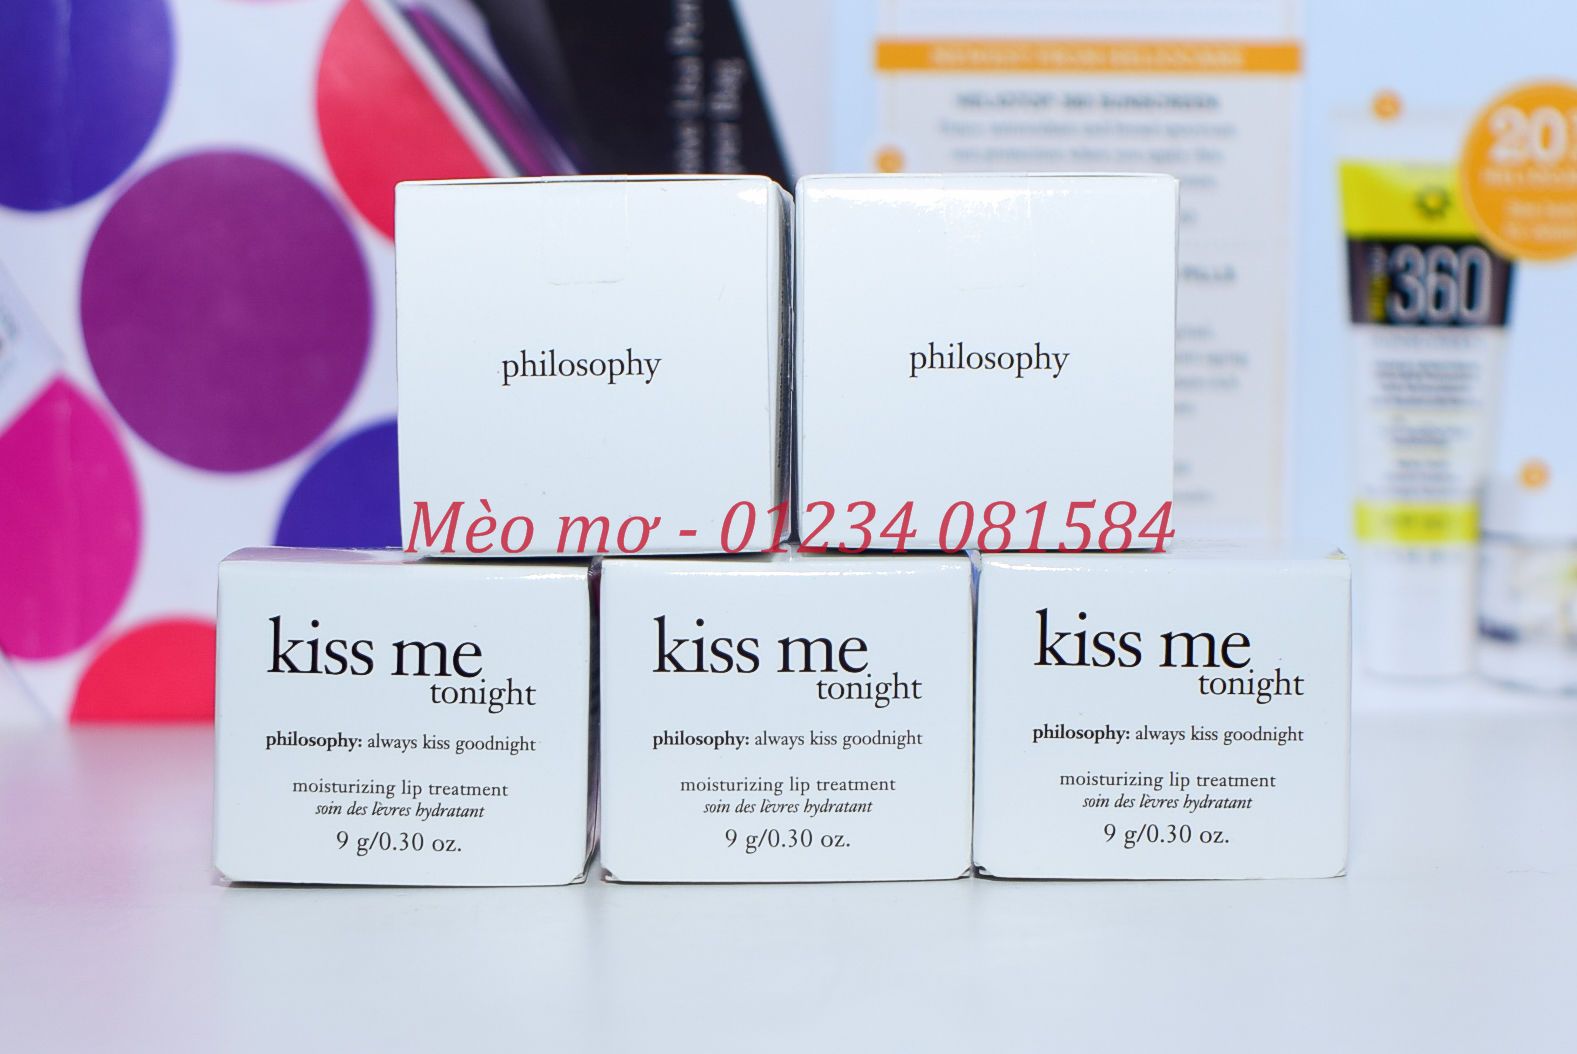 philosophy - Kiss Me Tonight - 9g